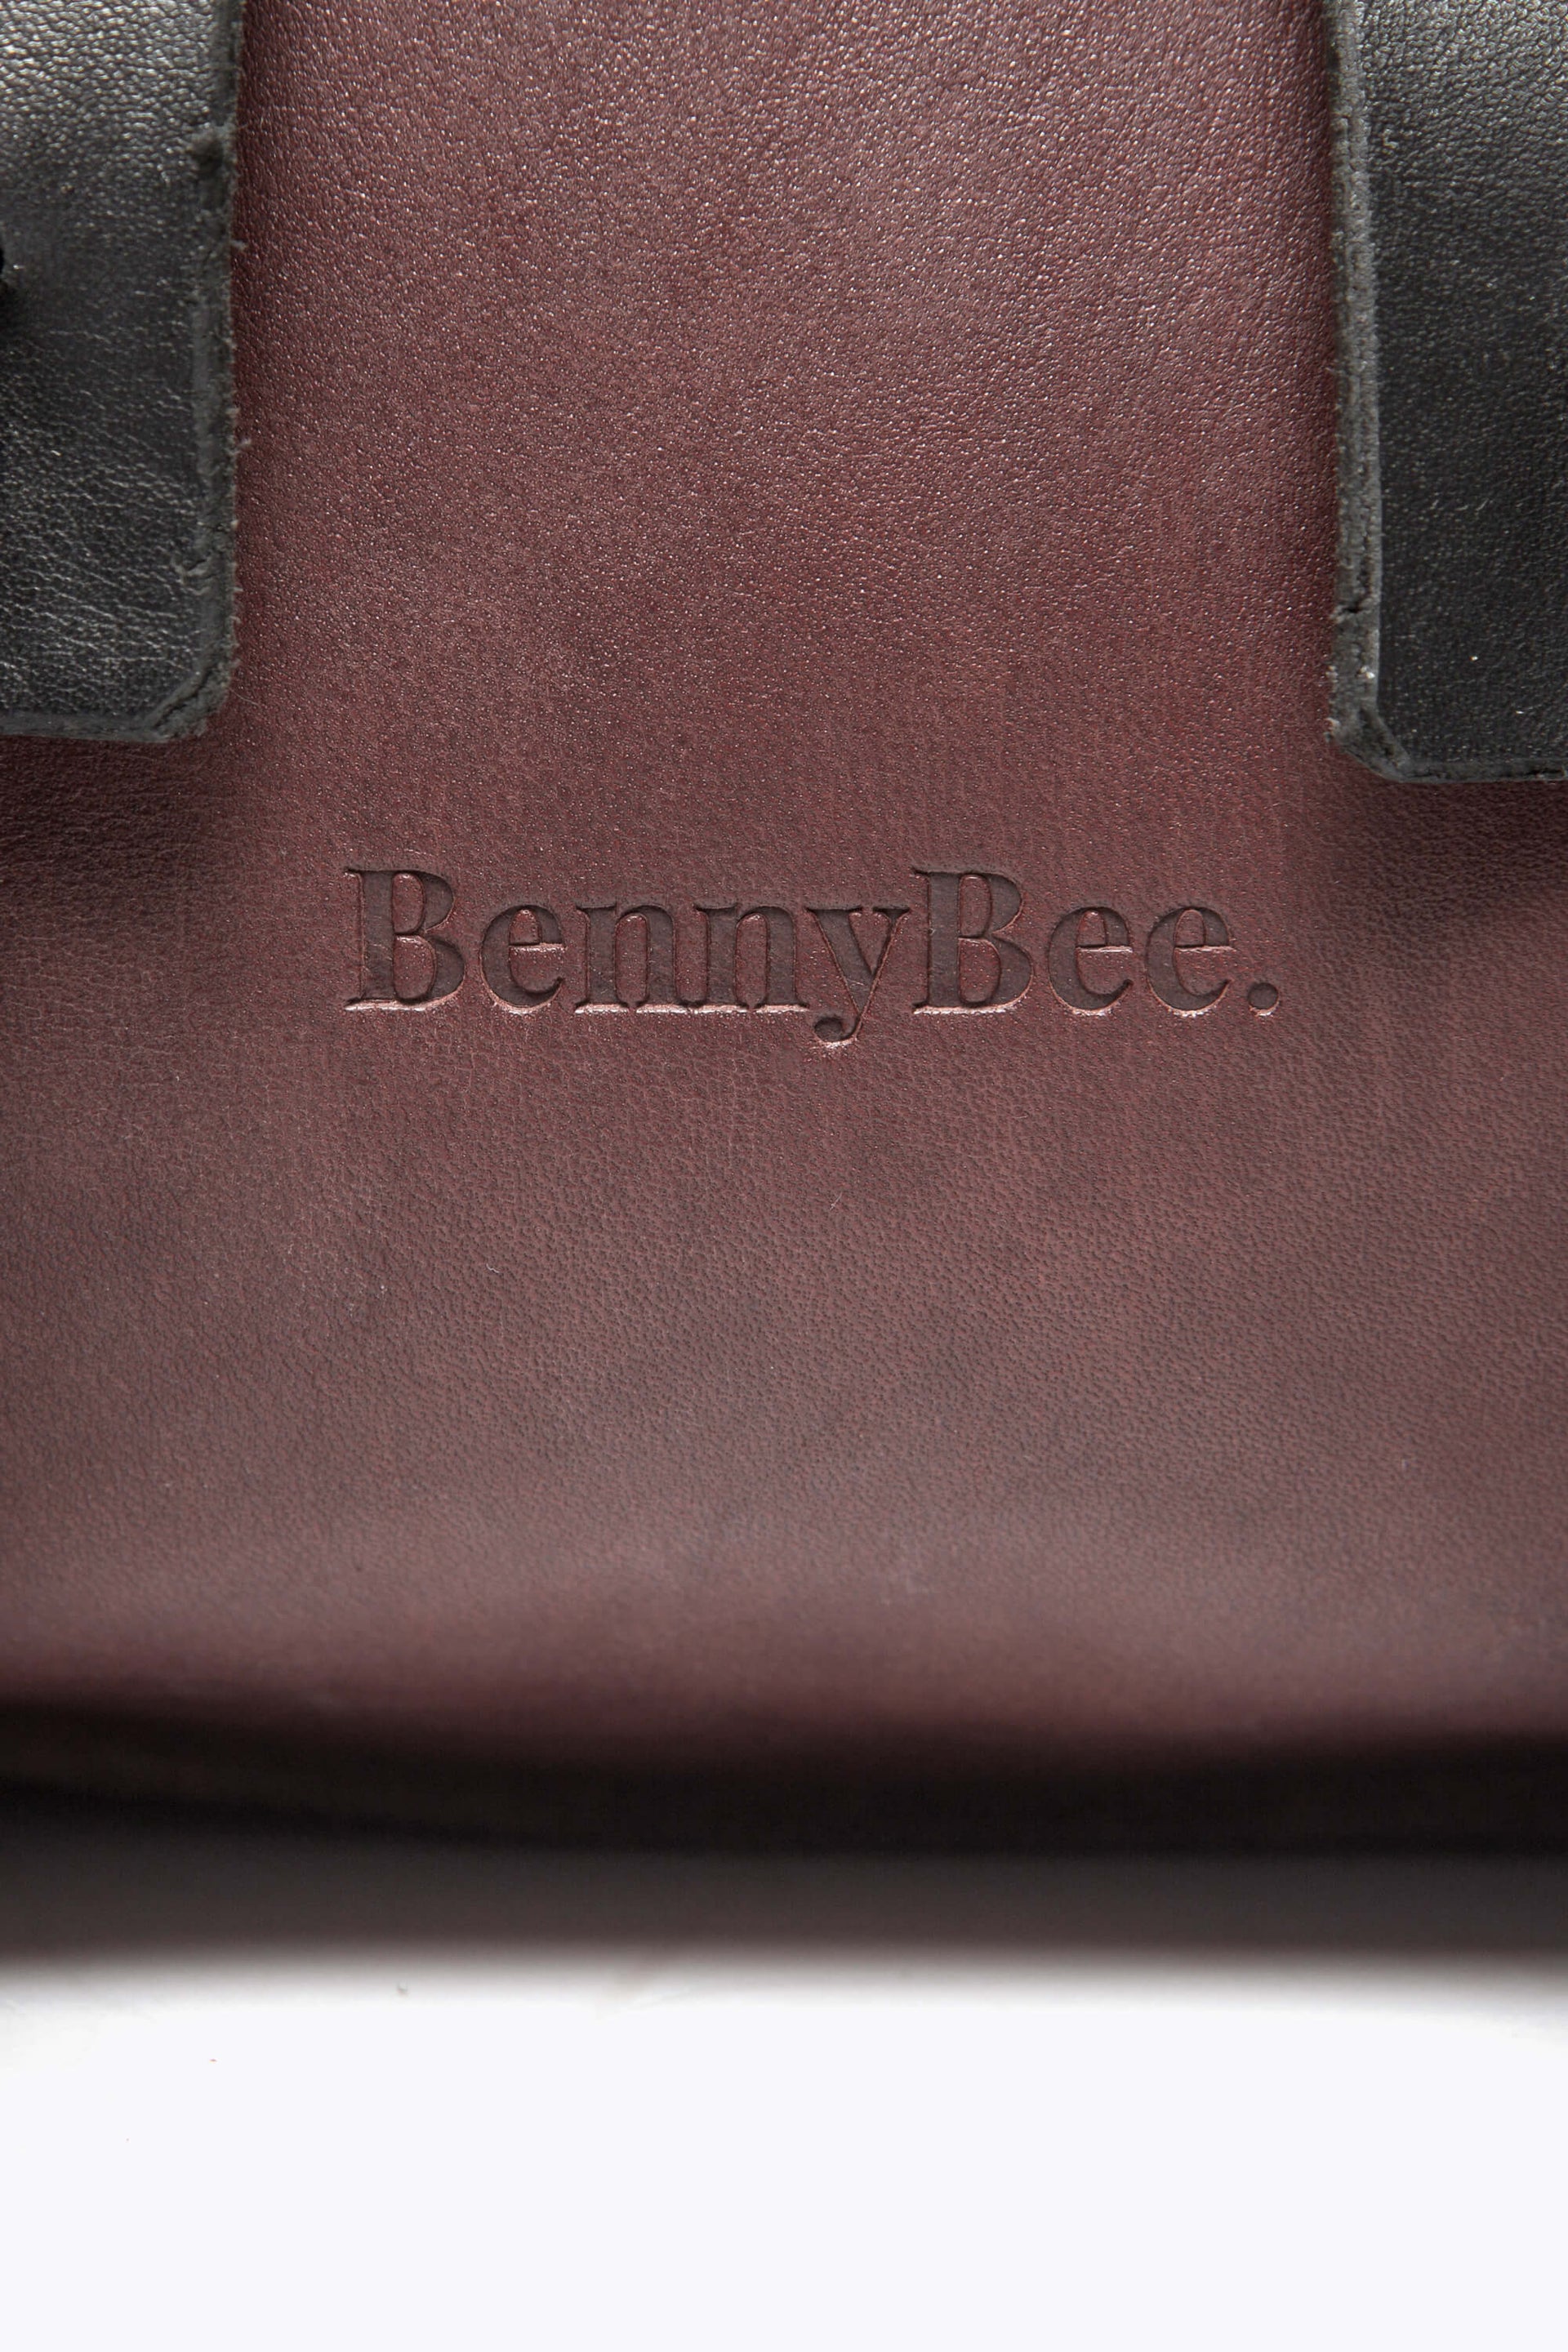 BennyBee Leather Rucksack Small Chestnut